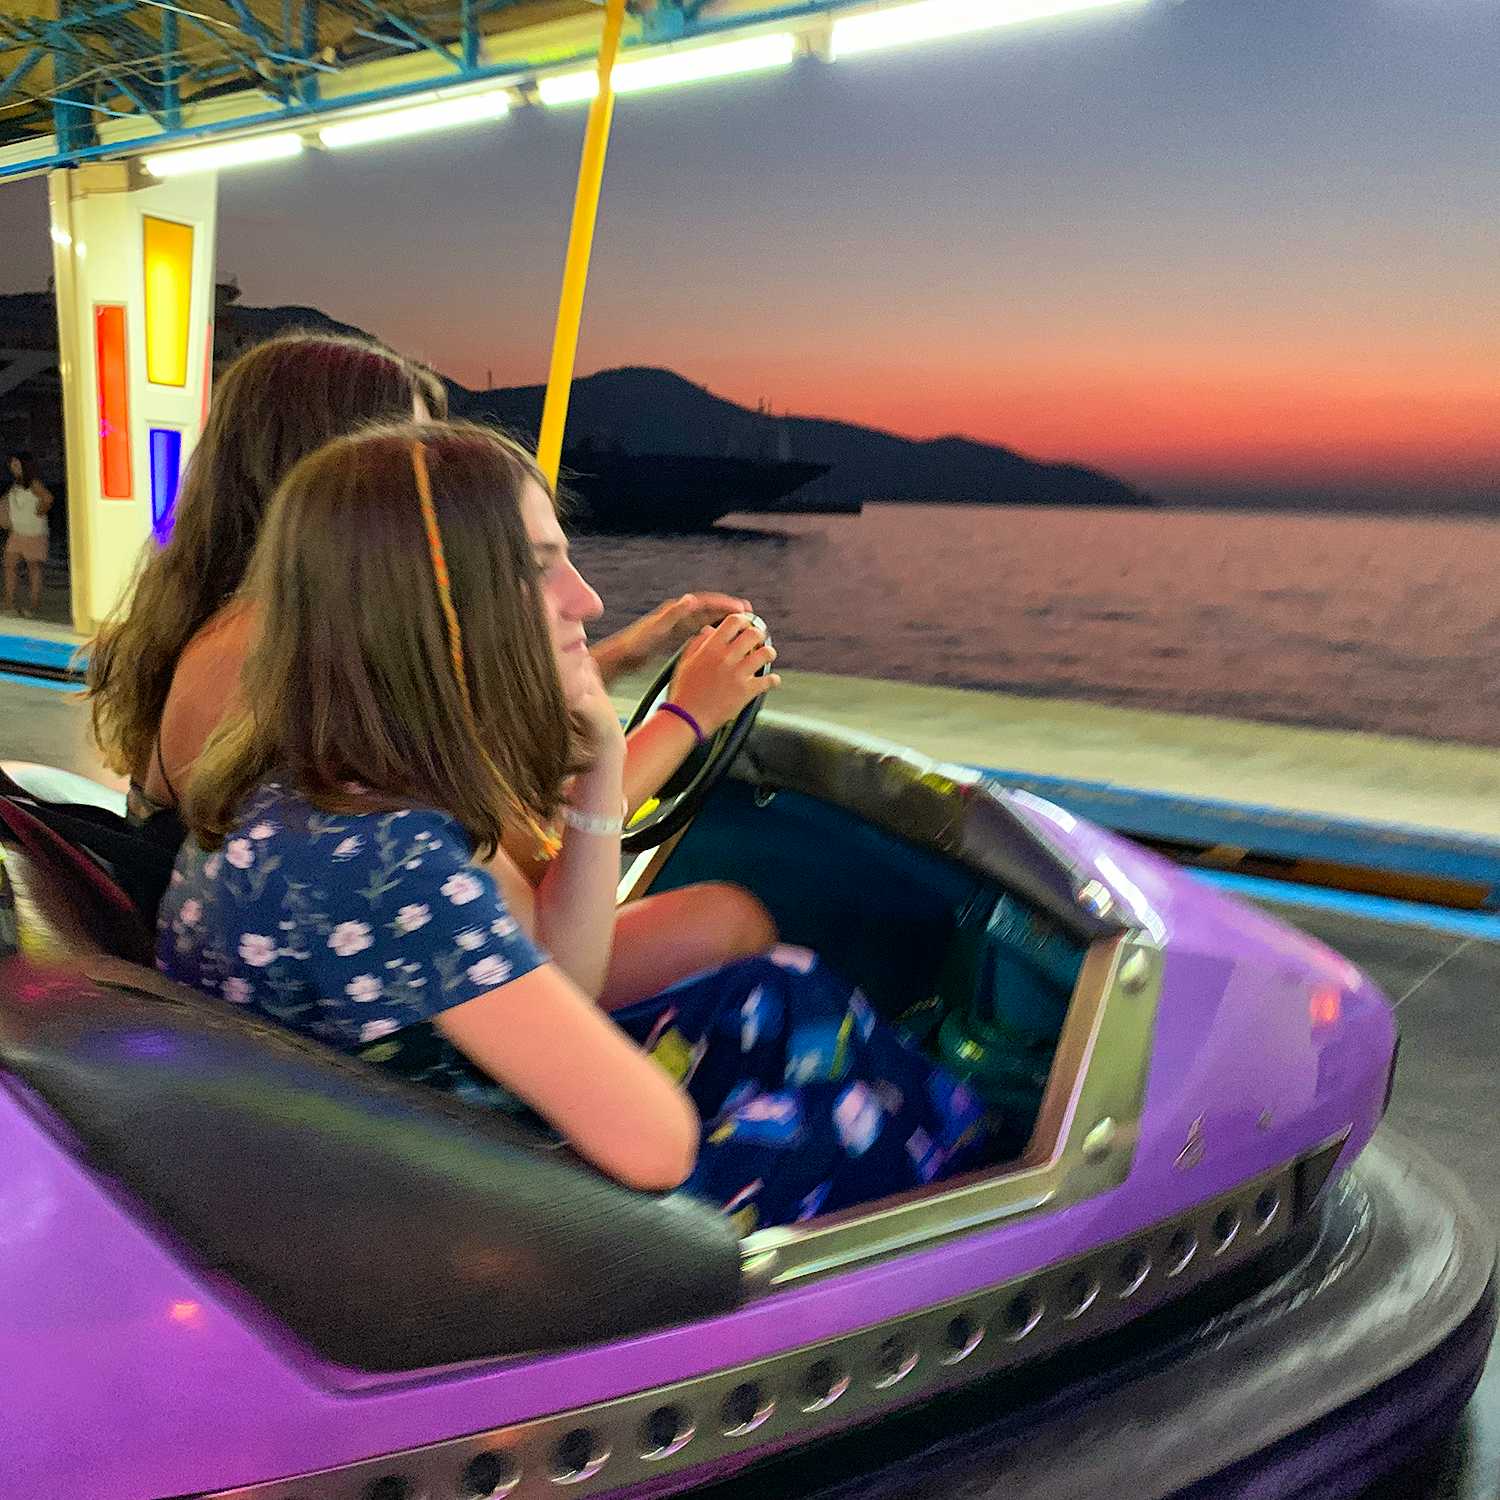 Photo Caption: Διασκεδάστε μετά το ηλιοβασίλεμα στο Luna Park με τα παιδιά σας